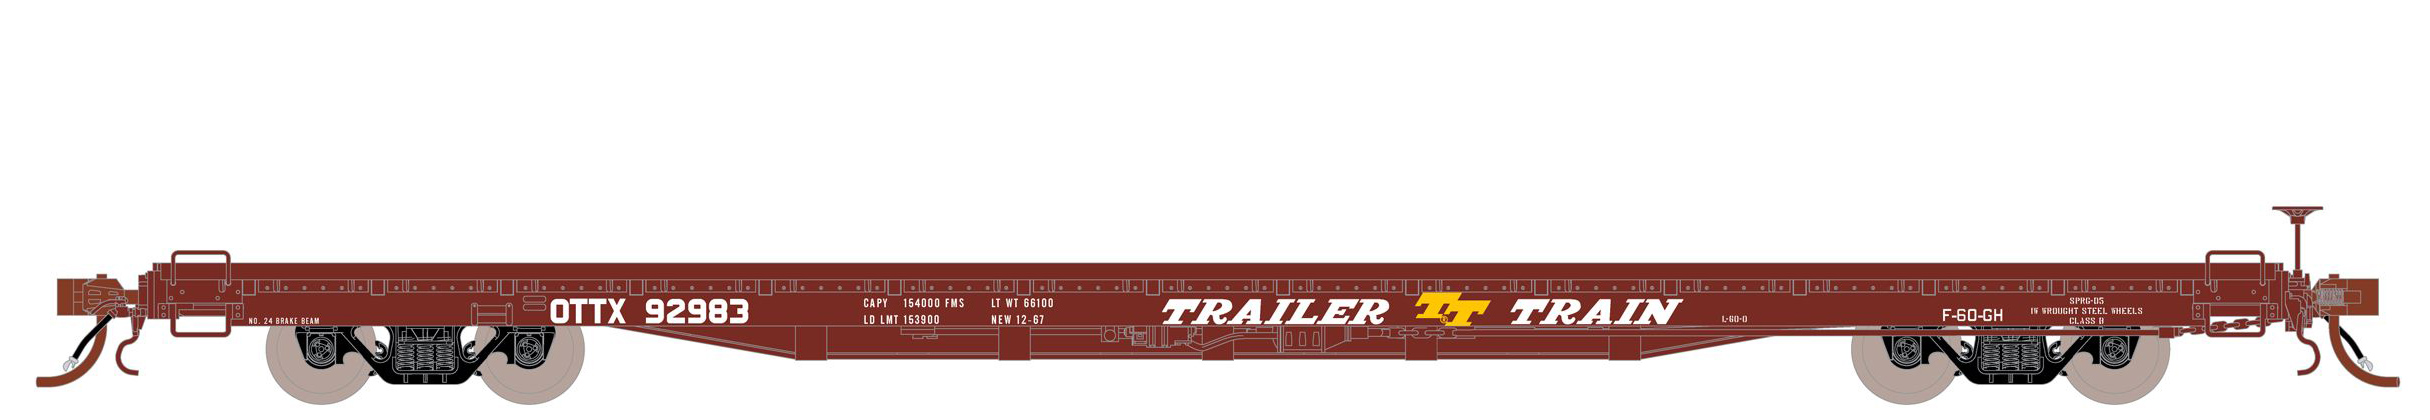 Trailer Train / OTTX